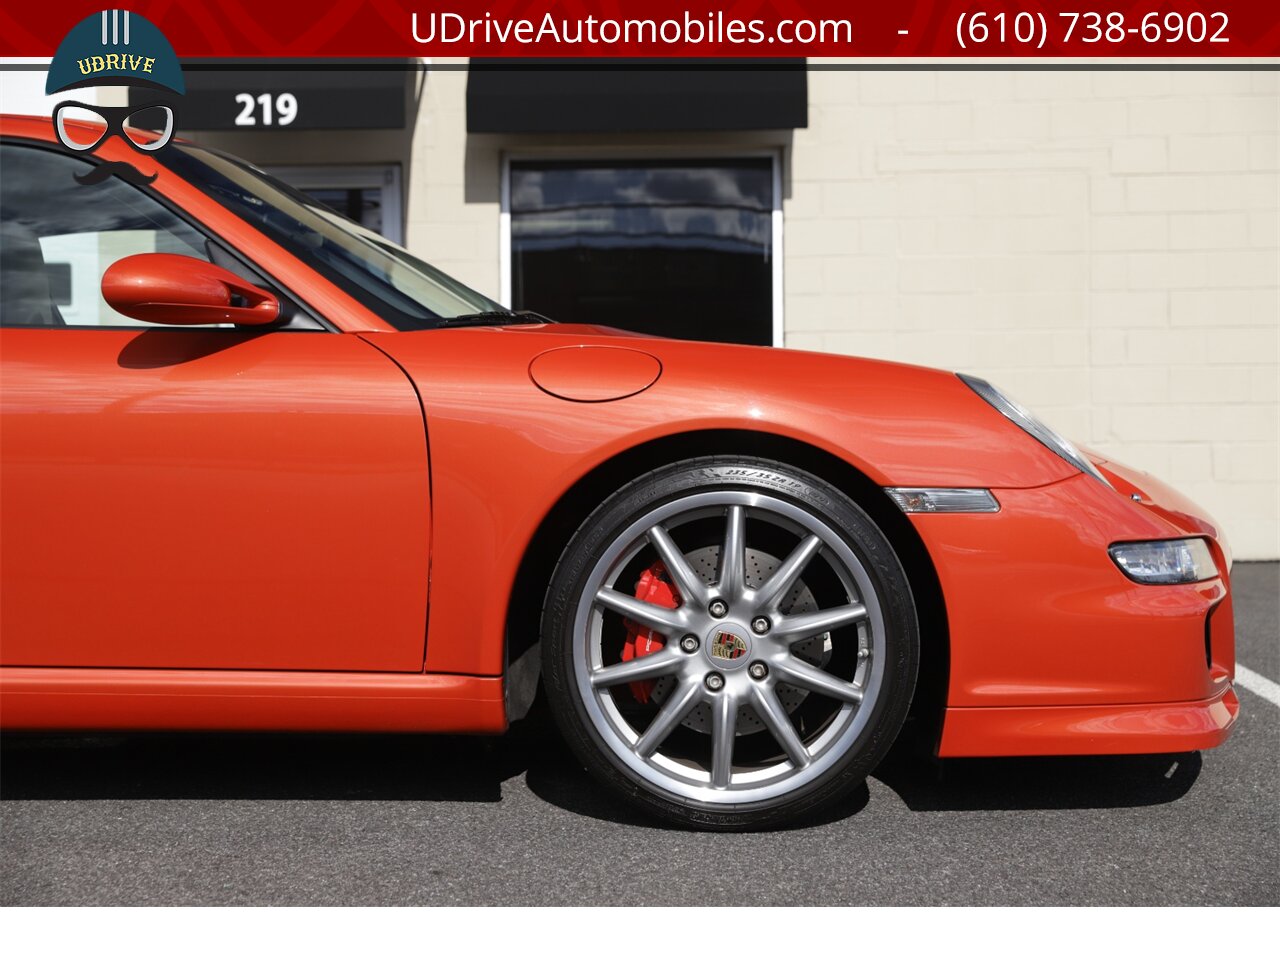 2008 Porsche 911 S 997S PTS Paint to Sample Zanzibar Red 6Sp  Factory Aerokit Adap Sprt Sts Pntd Backs Chrono Sprt Exhaust 17k Miles 1of a Kind - Photo 15 - West Chester, PA 19382